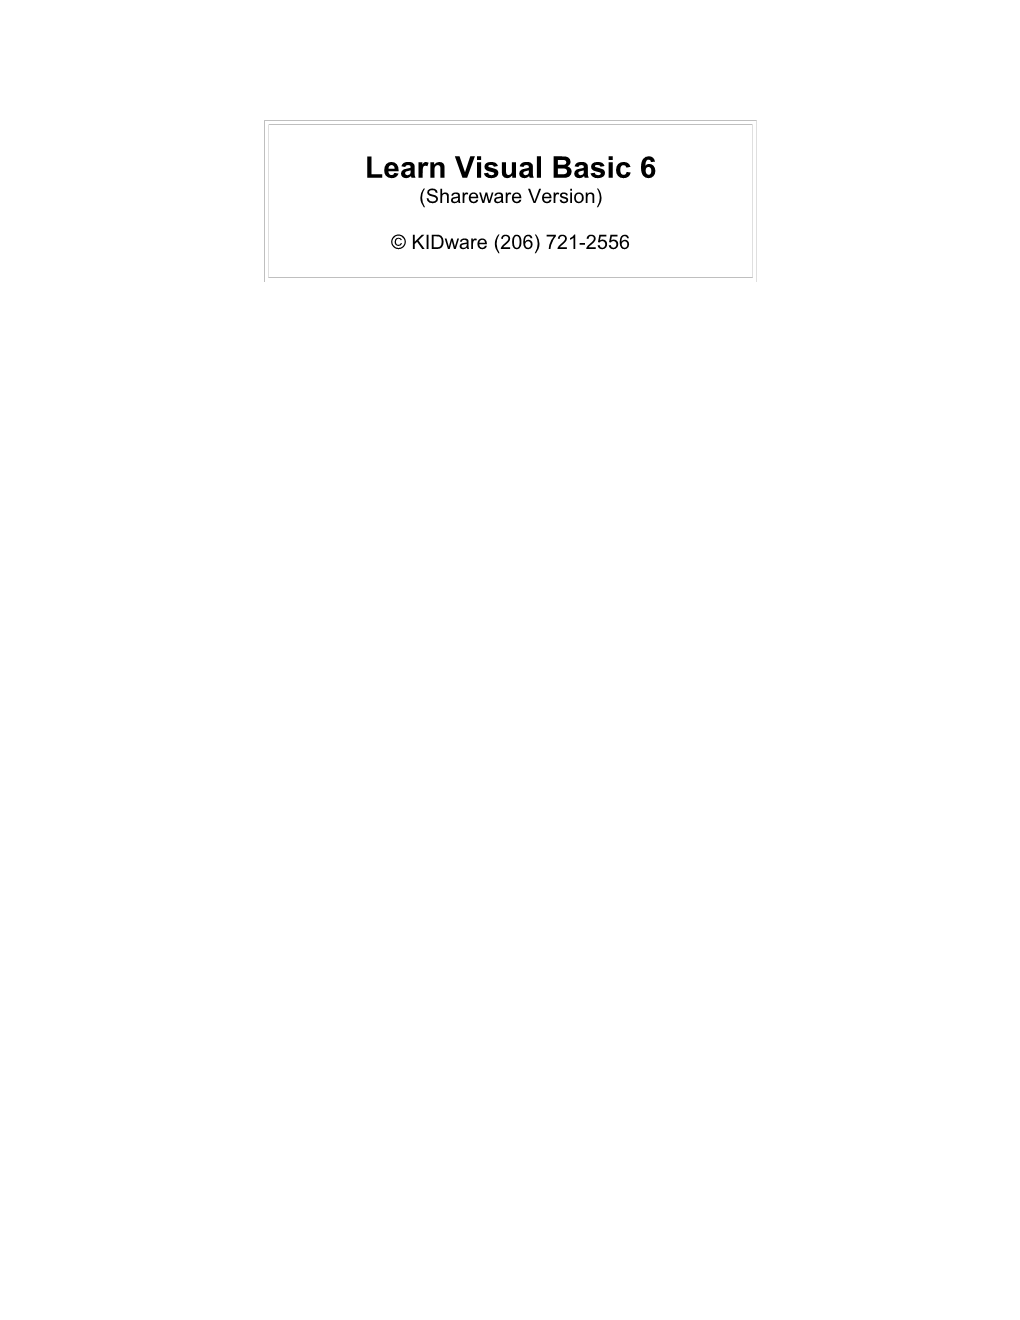 Learn Visual Basic 5